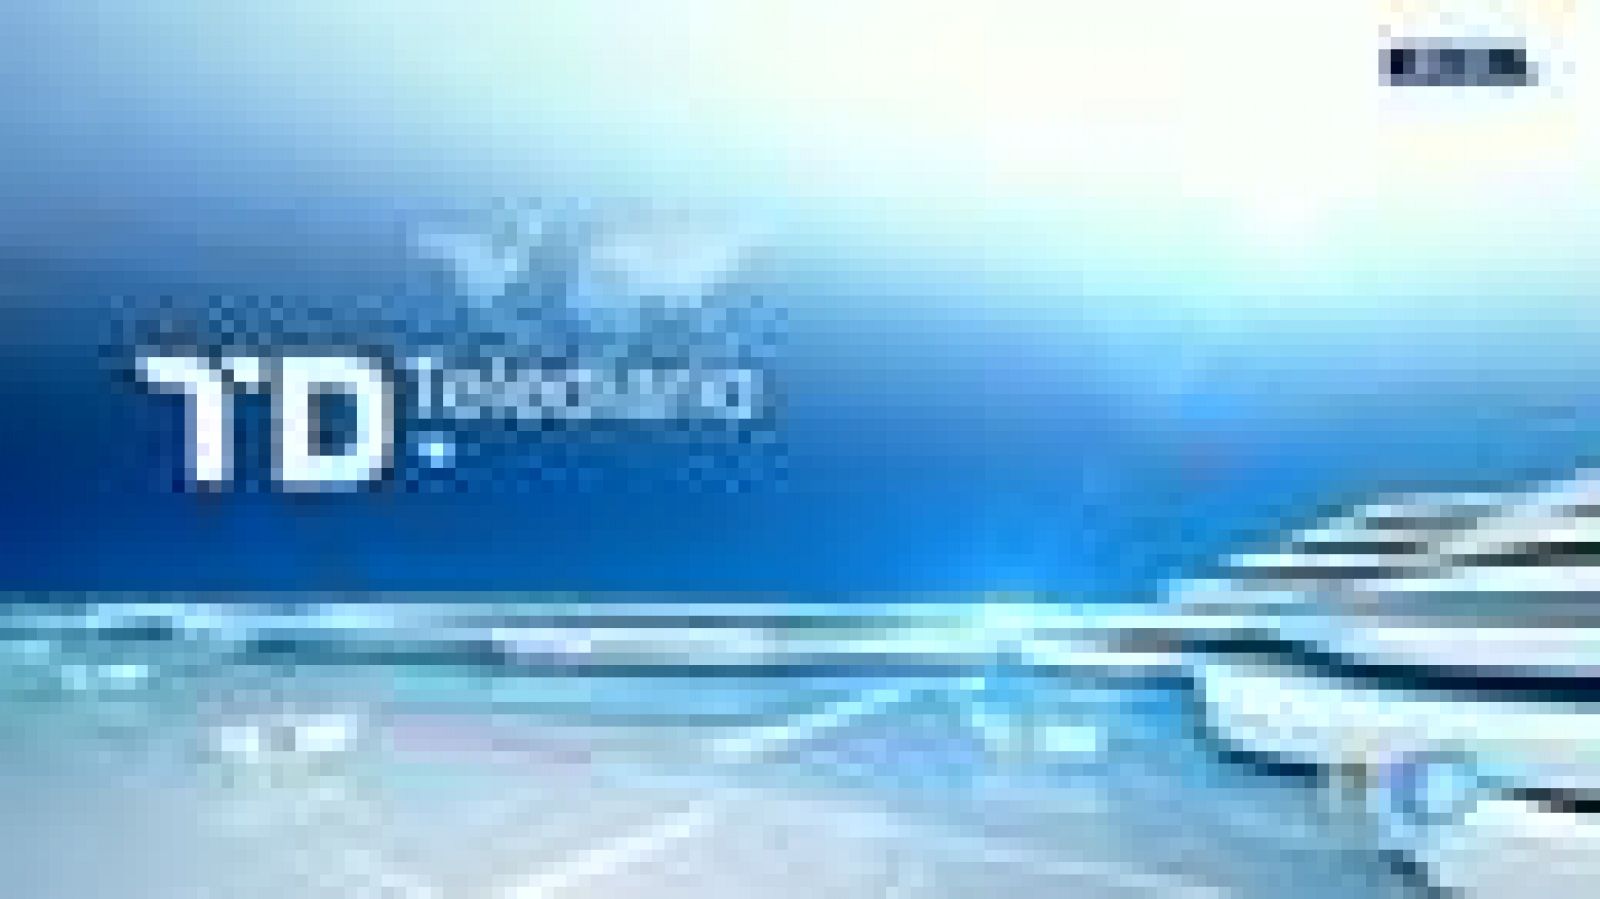 Telediario 1: Telediario Matinal en 4' - 01/10/12 | RTVE Play